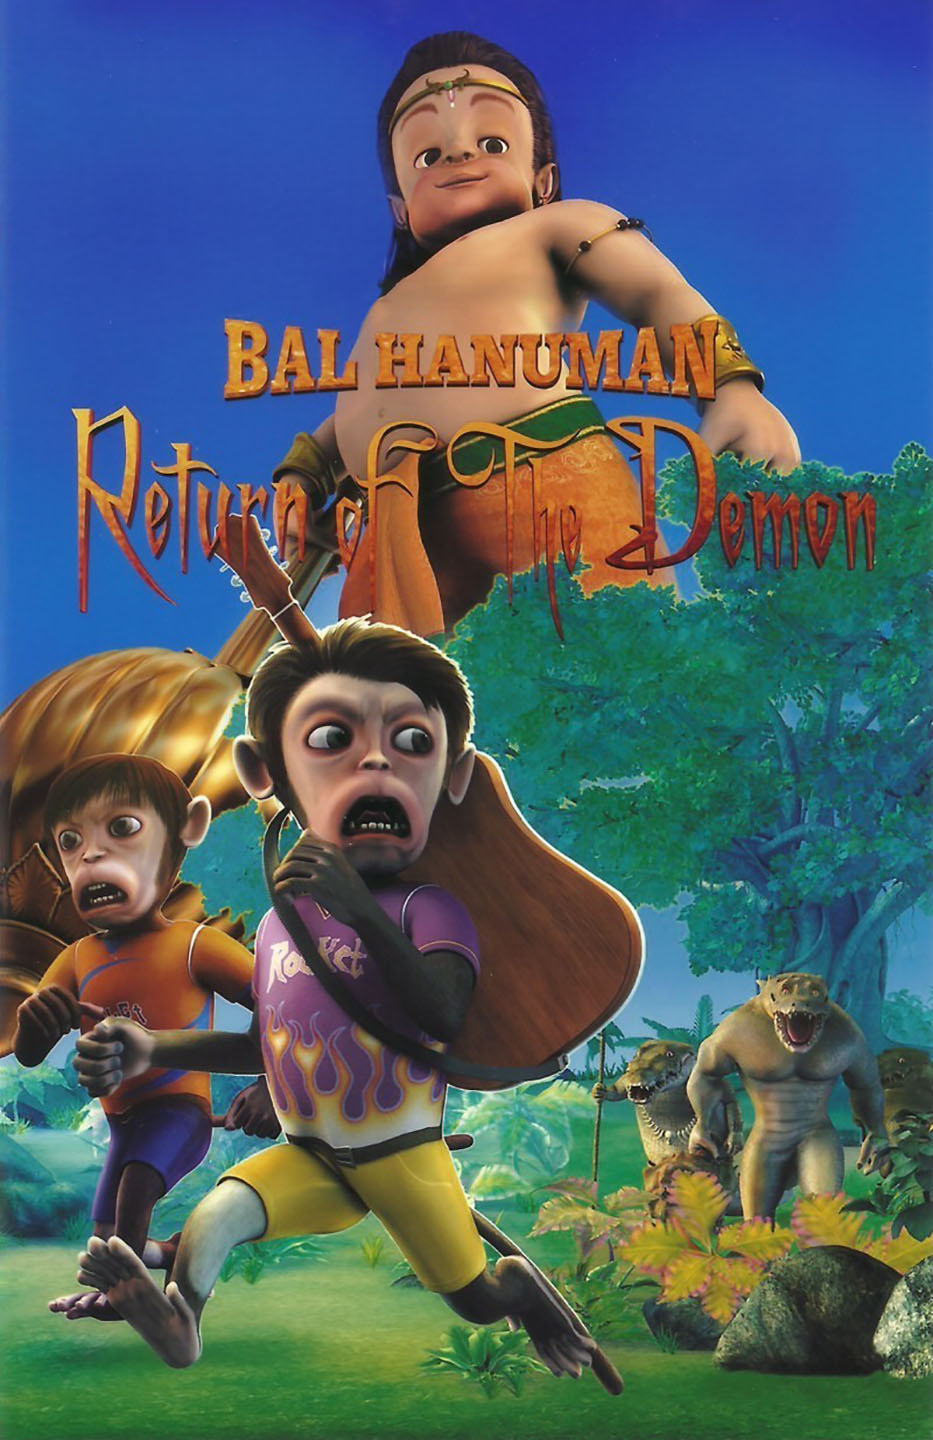 Bal Hanuman Return Of The Demon - Movie Reviews and Movie Ratings - TV Guide